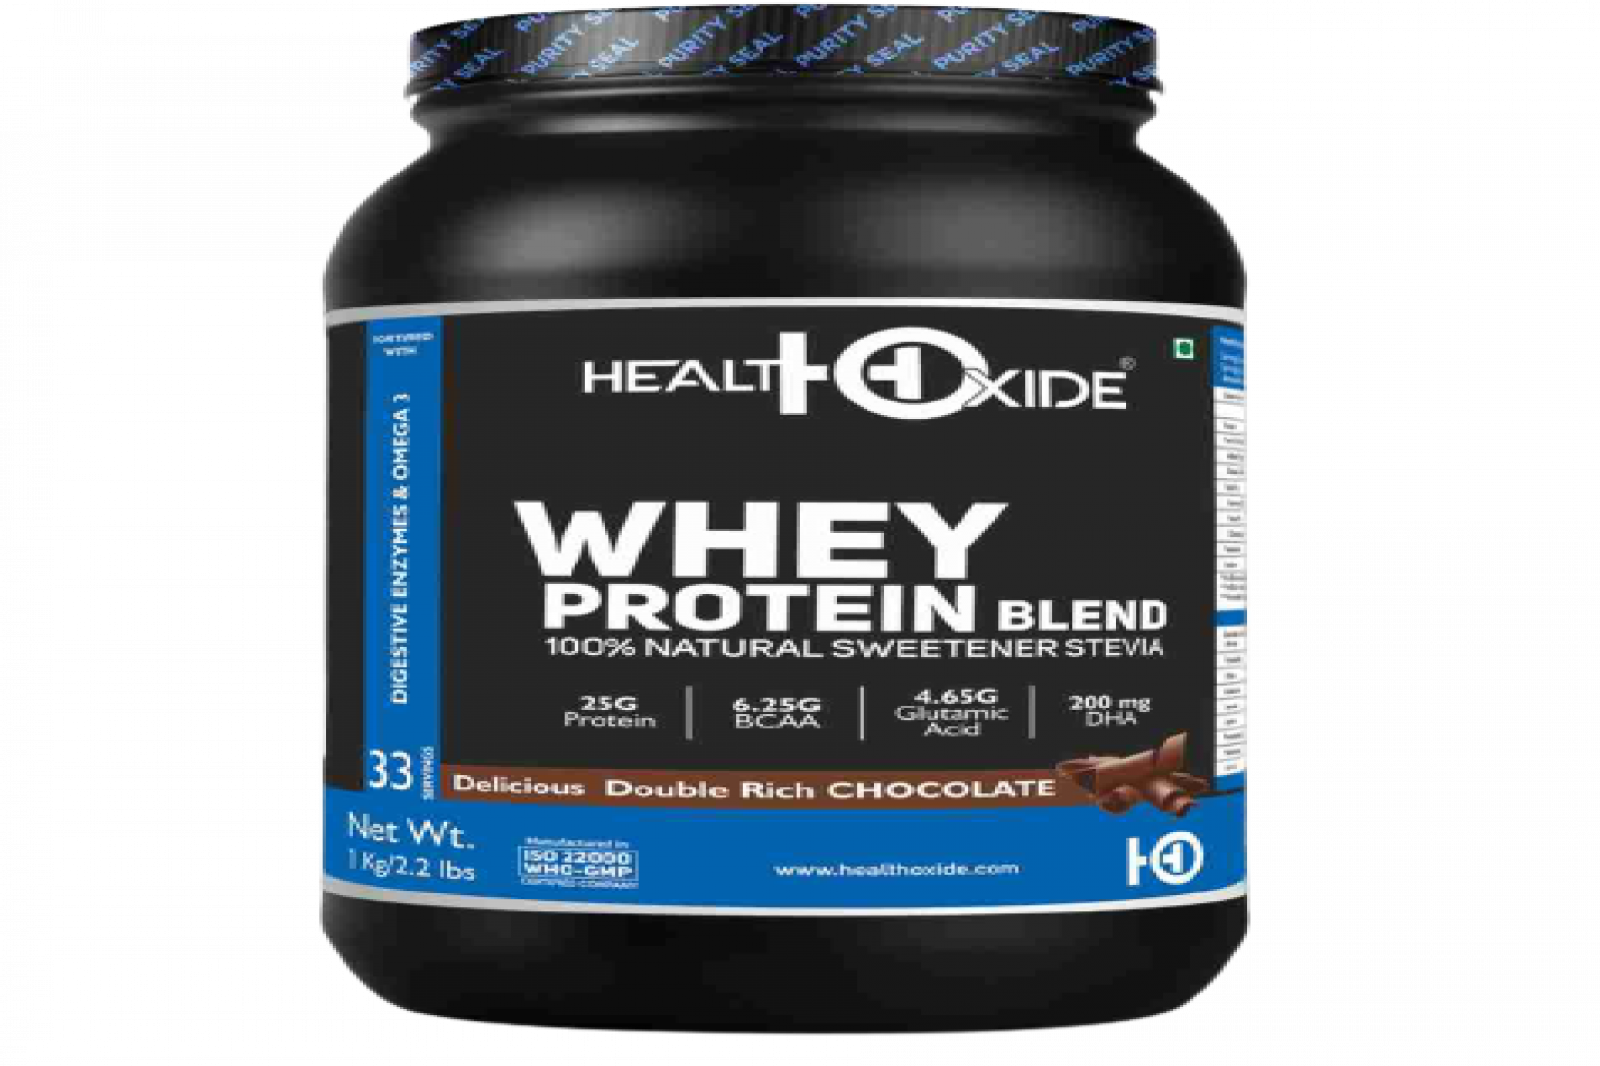 Healthoxide Whey protein